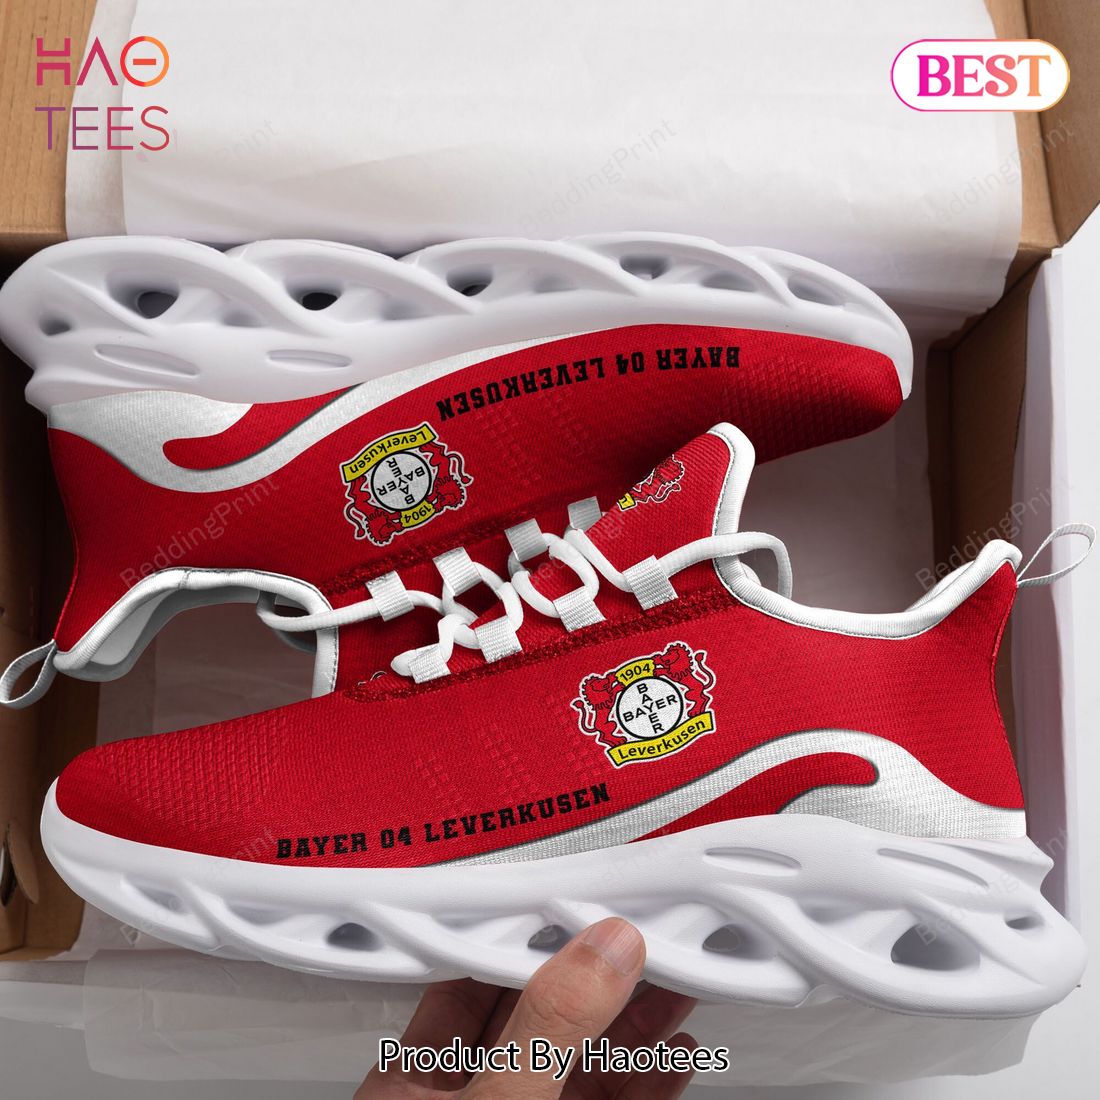 Bundesliga Bayer 04 Leverkusen Max Soul Shoes